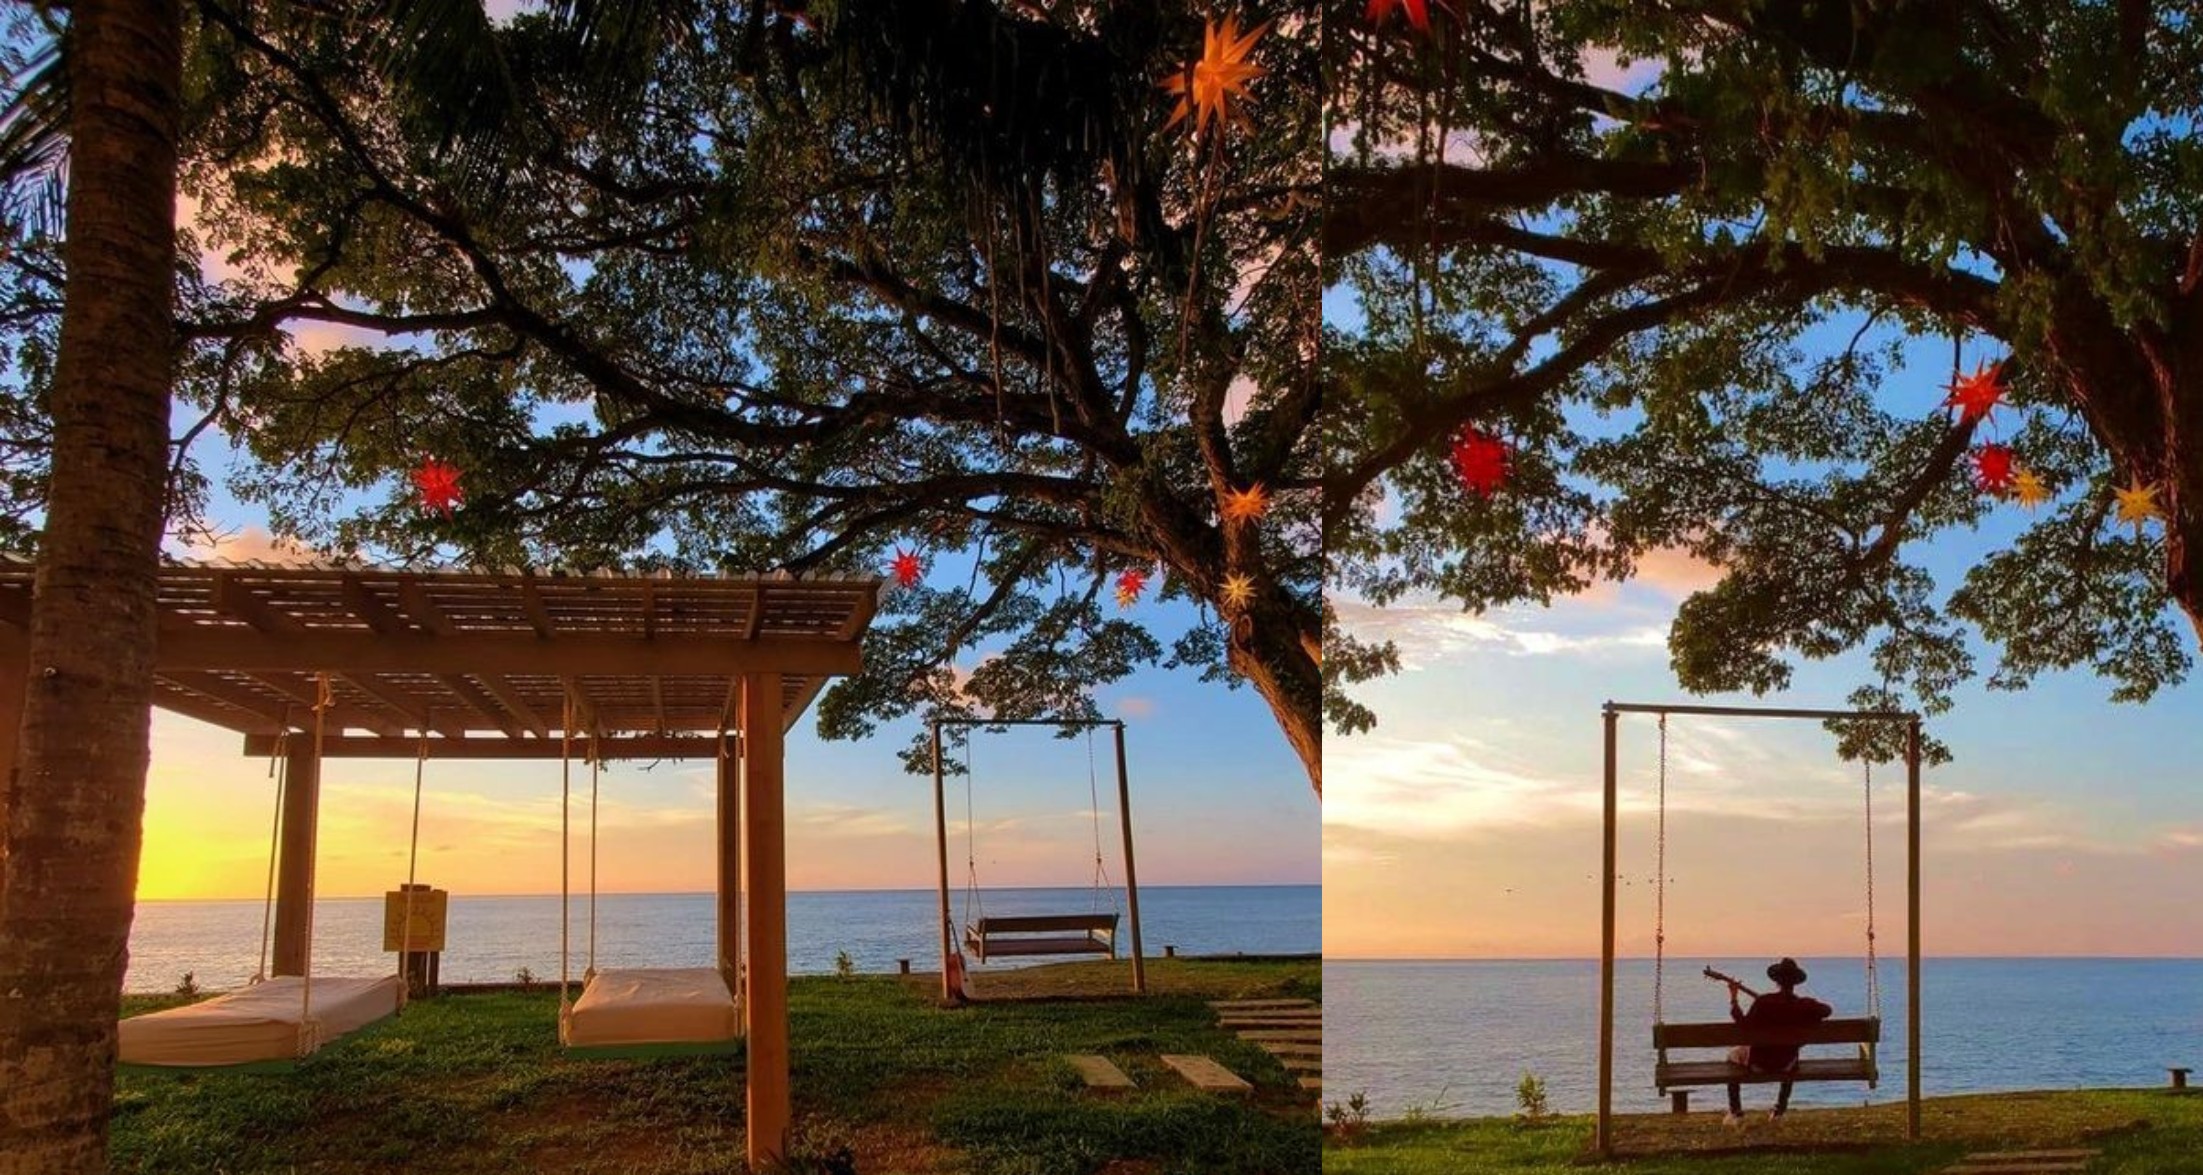 The Sunset Hut para relajarse frente al mar en Omoa